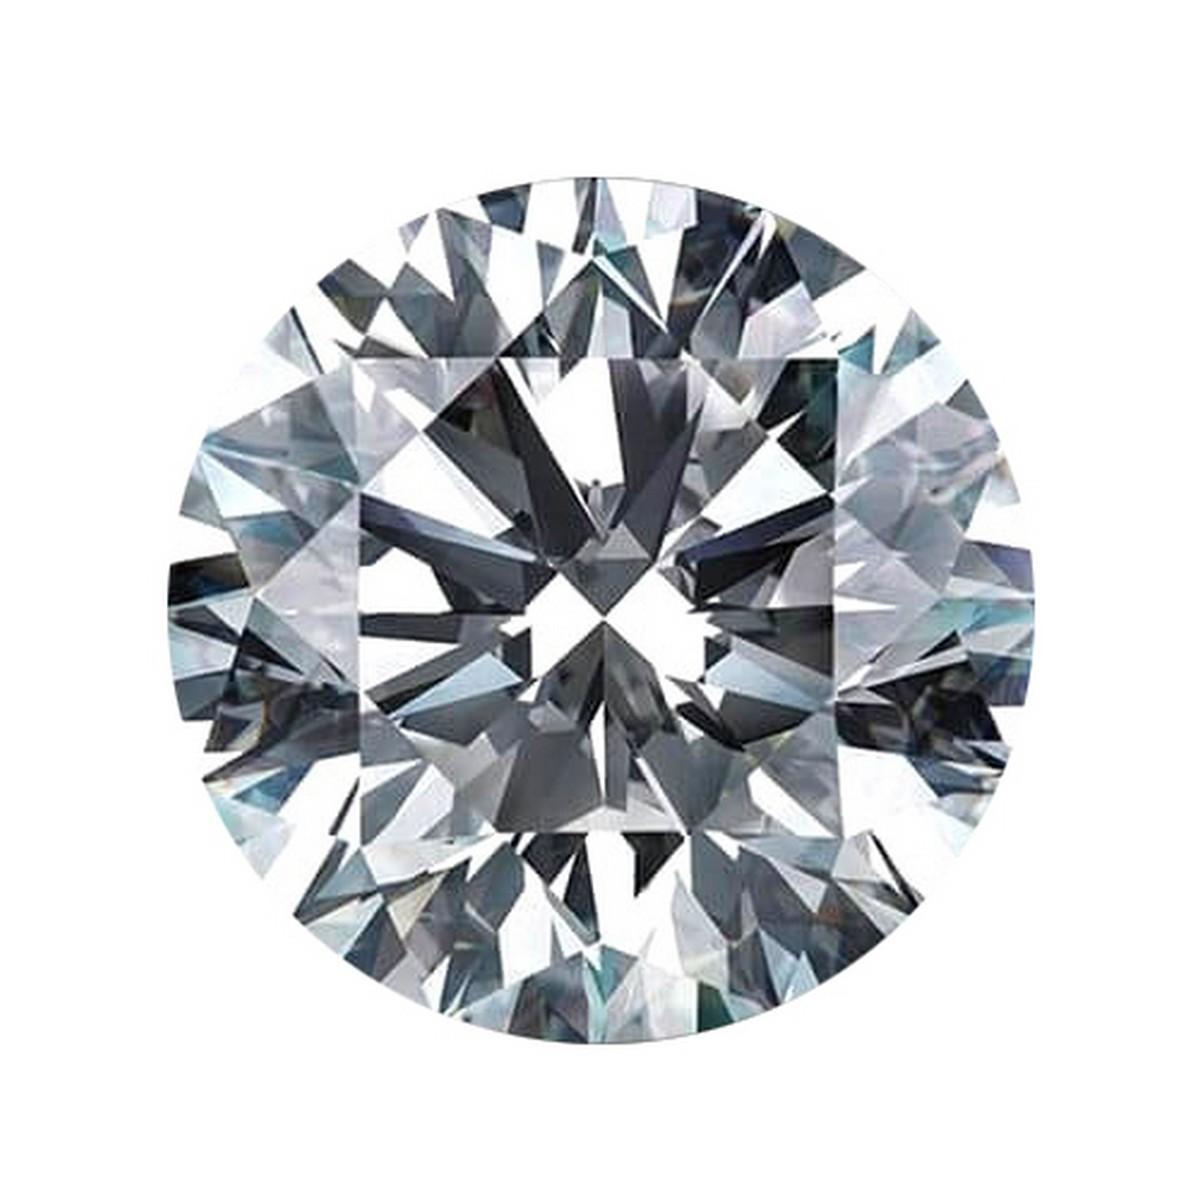 1.13 ctw. VVS2 IGI Certified Round Brilliant Cut Loose Diamond (LAB GROWN)